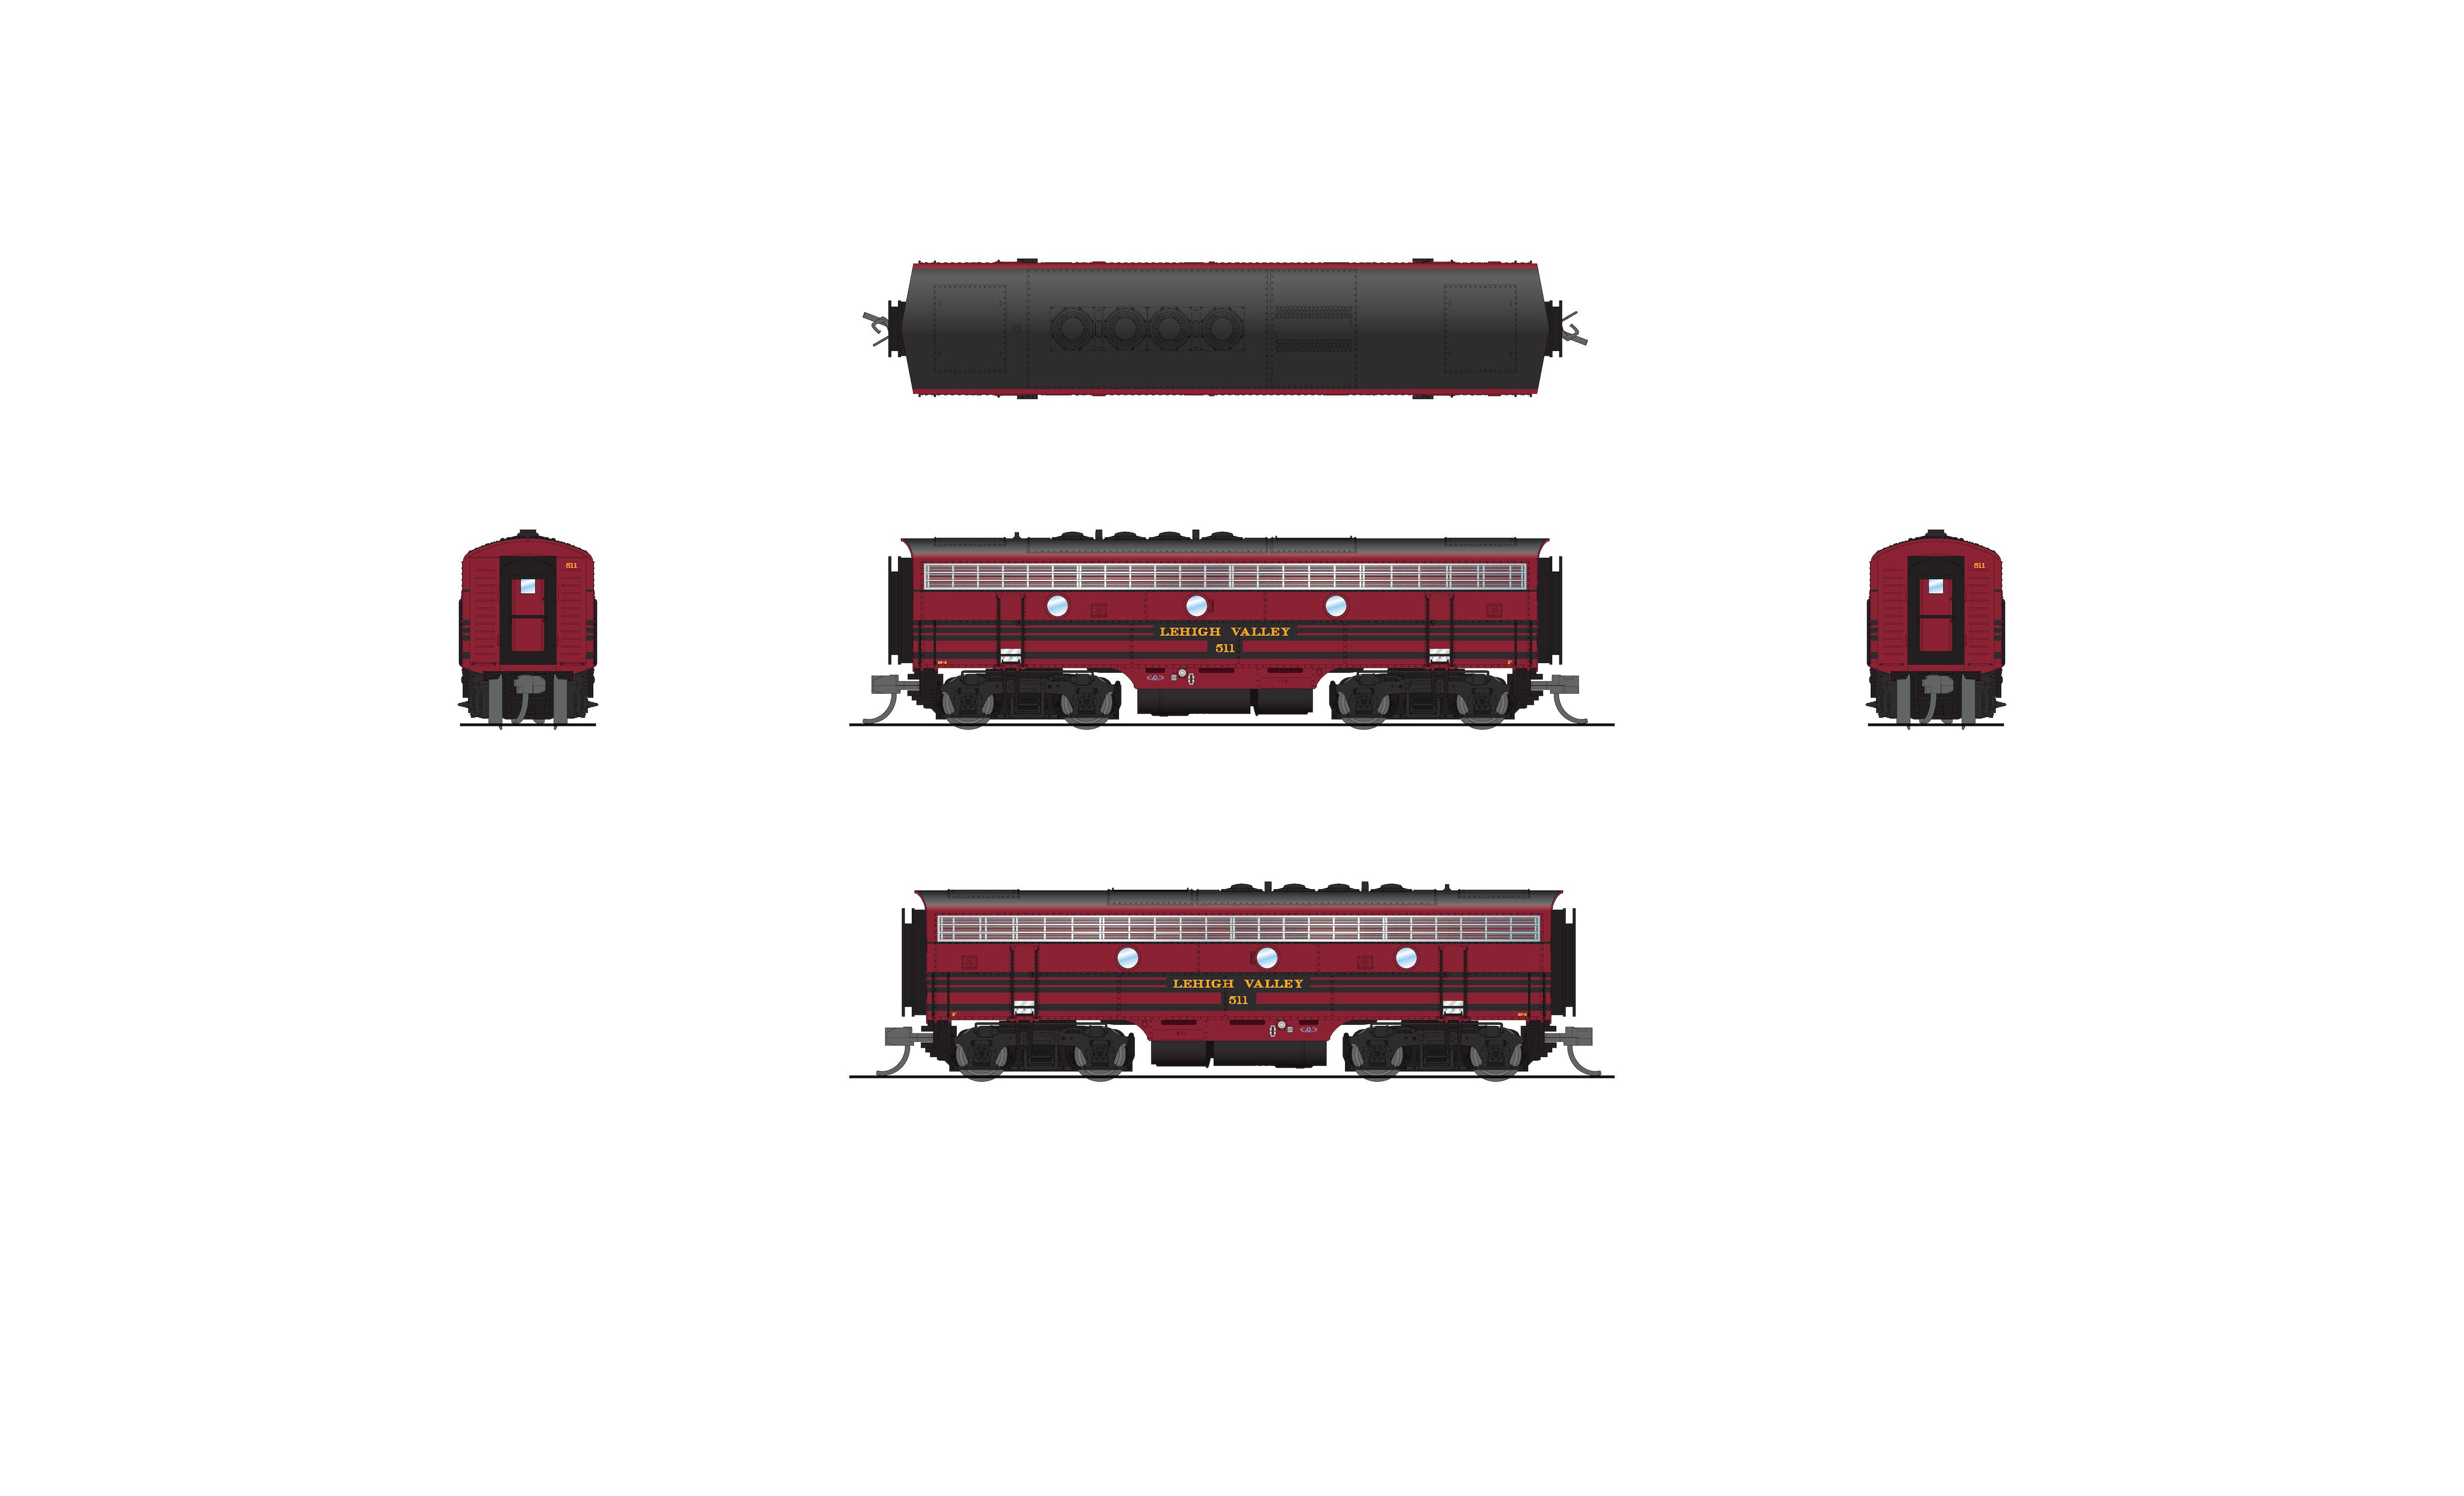 9059 EMD F3B, LV 513, Cornell Red w/ Black Stripes, No-Sound / DCC-Ready, N